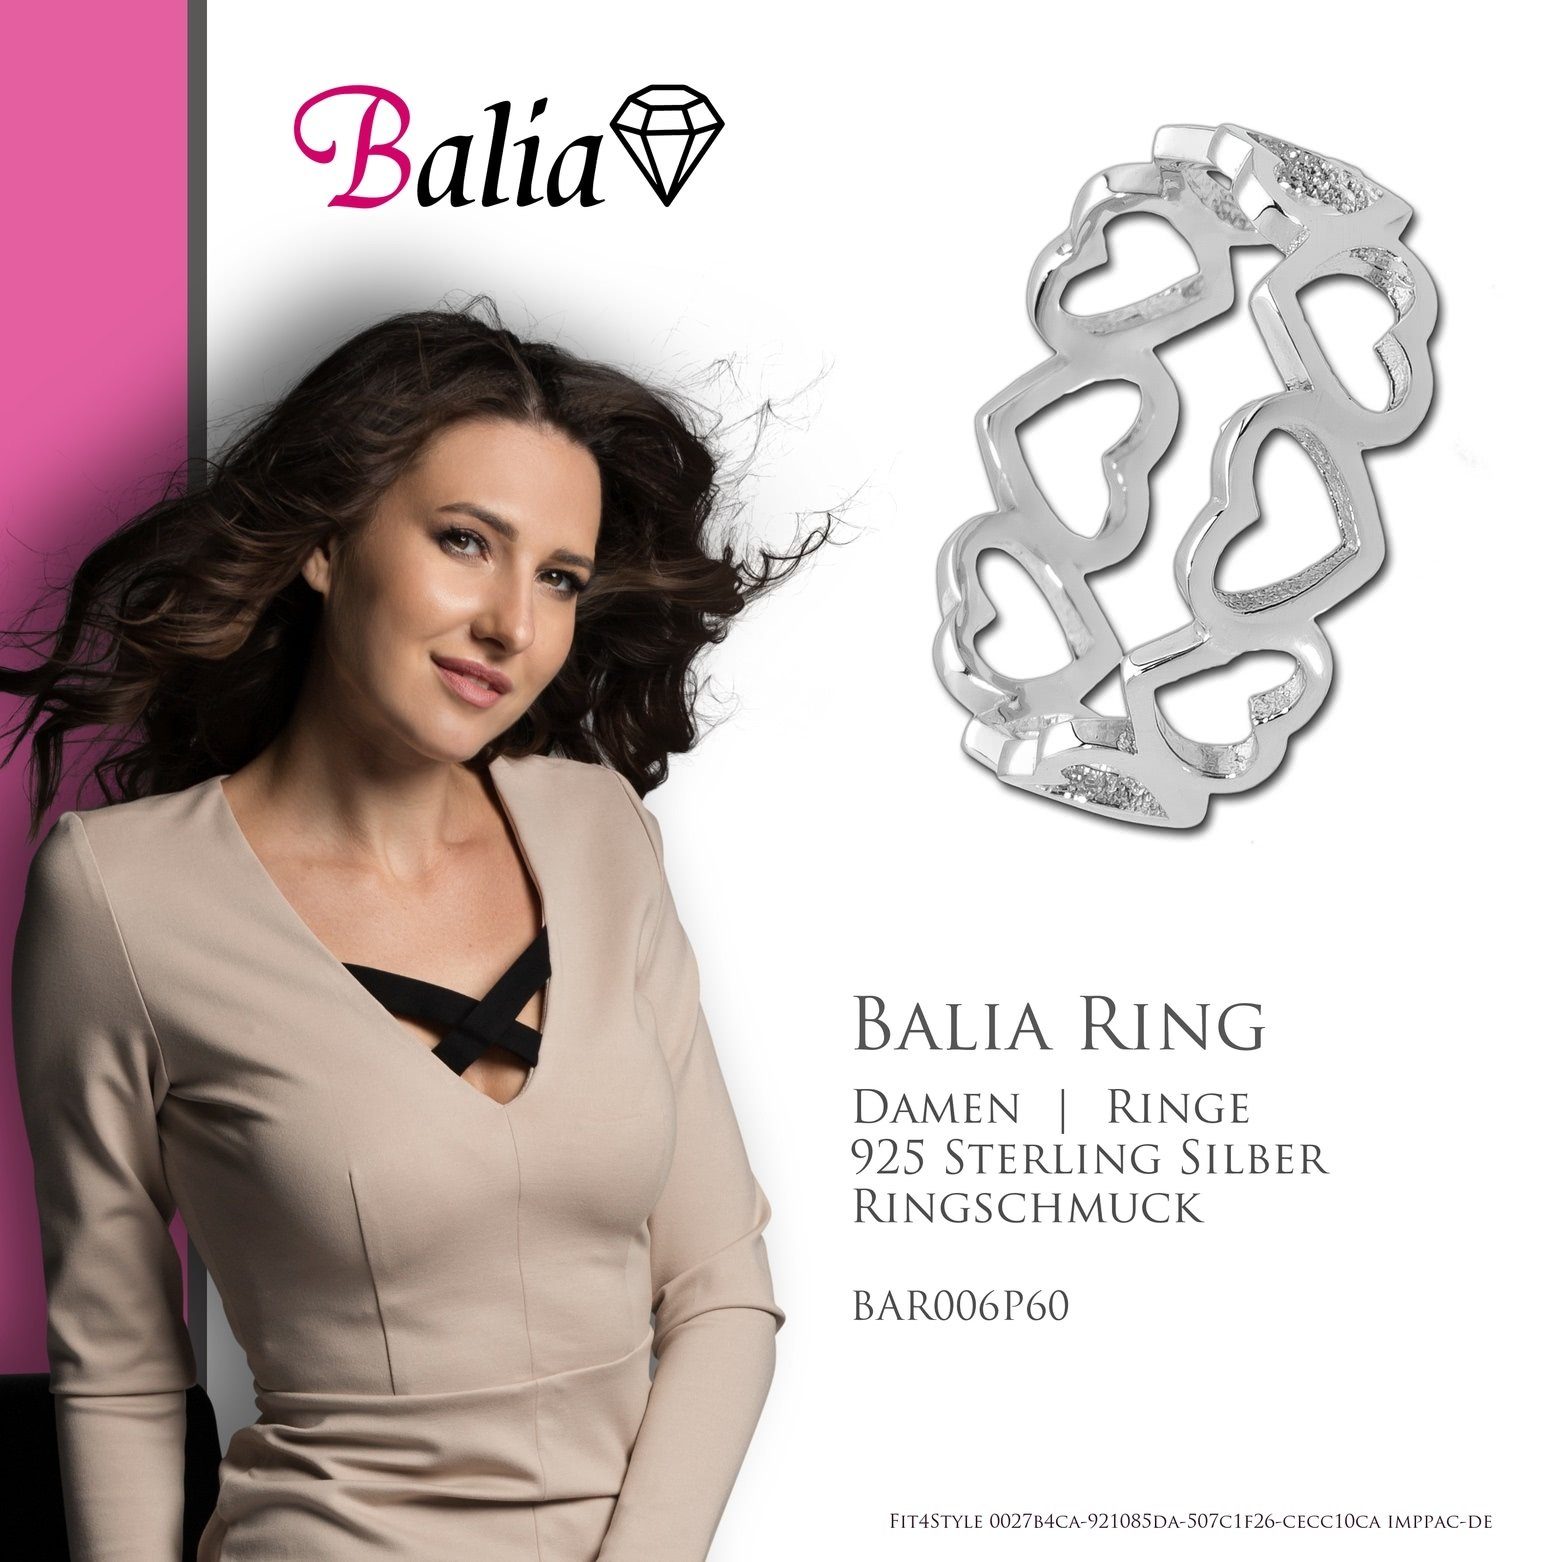 Herzen, Damen Balia (19,1), Ring 925 60 Silberring Herzen Sterling Silber vielen für (Fingerring), Damen Balia Ring mit